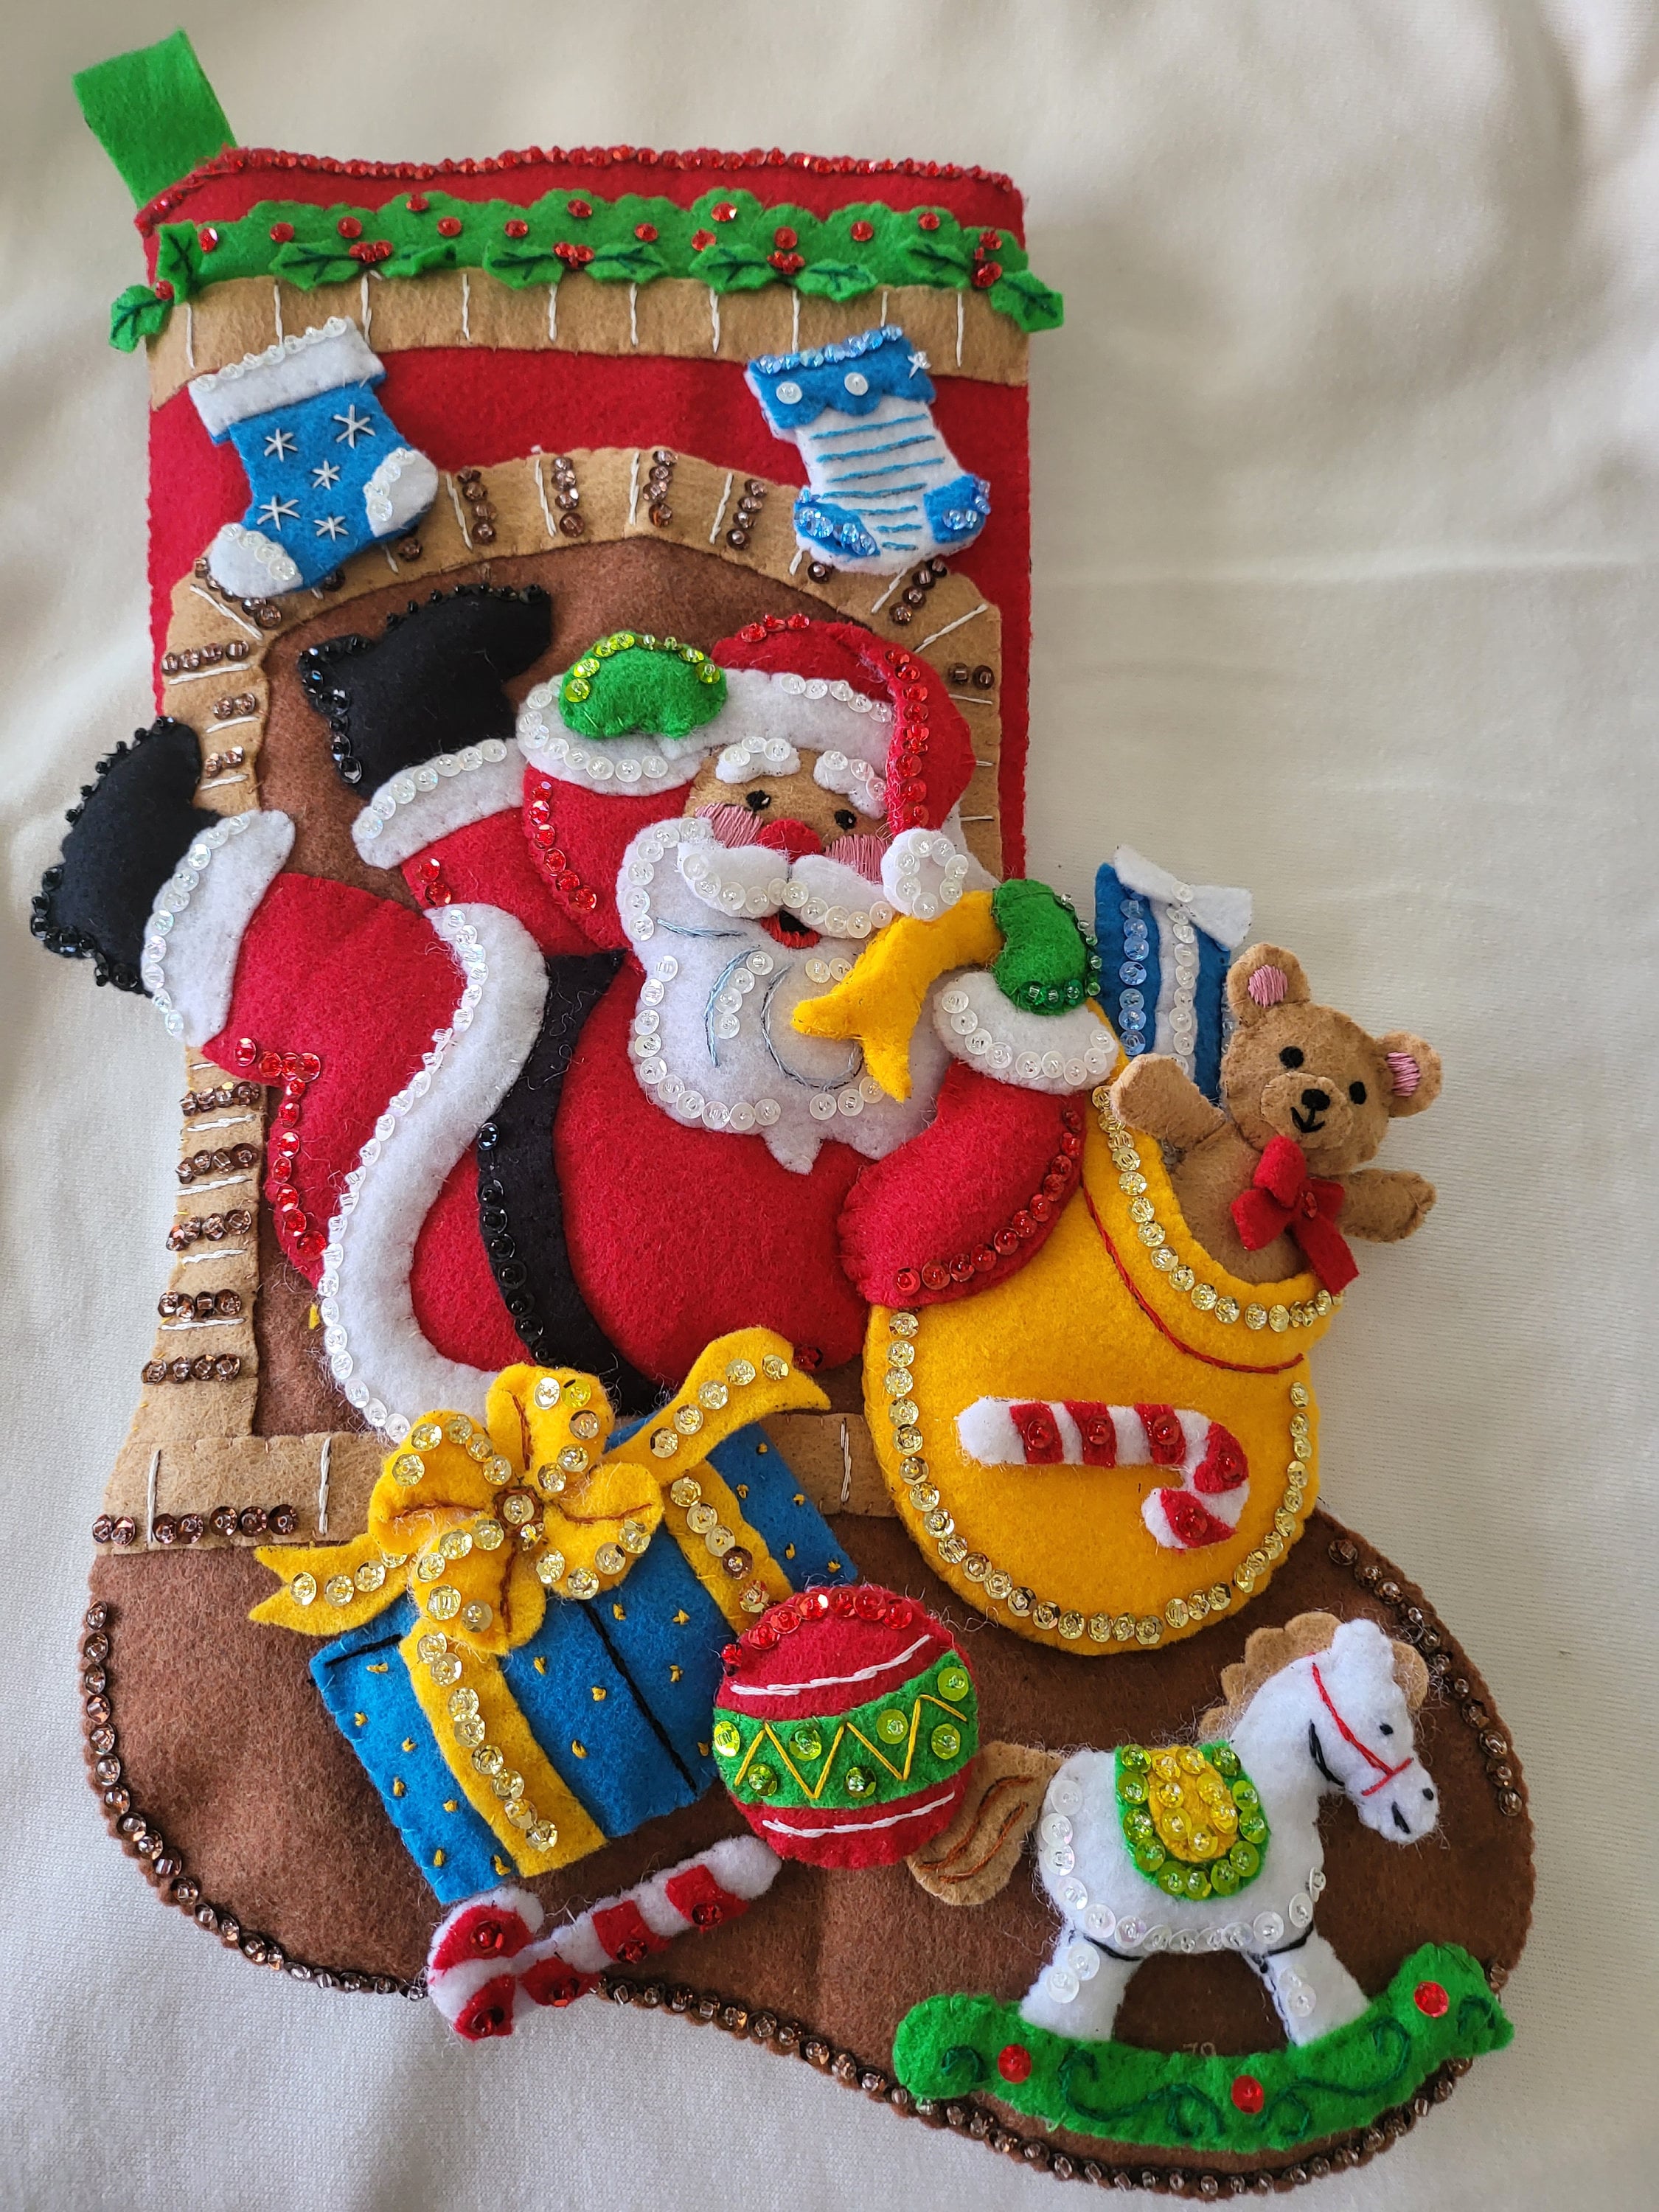 Christmas Stocking, Finished Bucilla Kit, Handmade FIREMAN SANTA